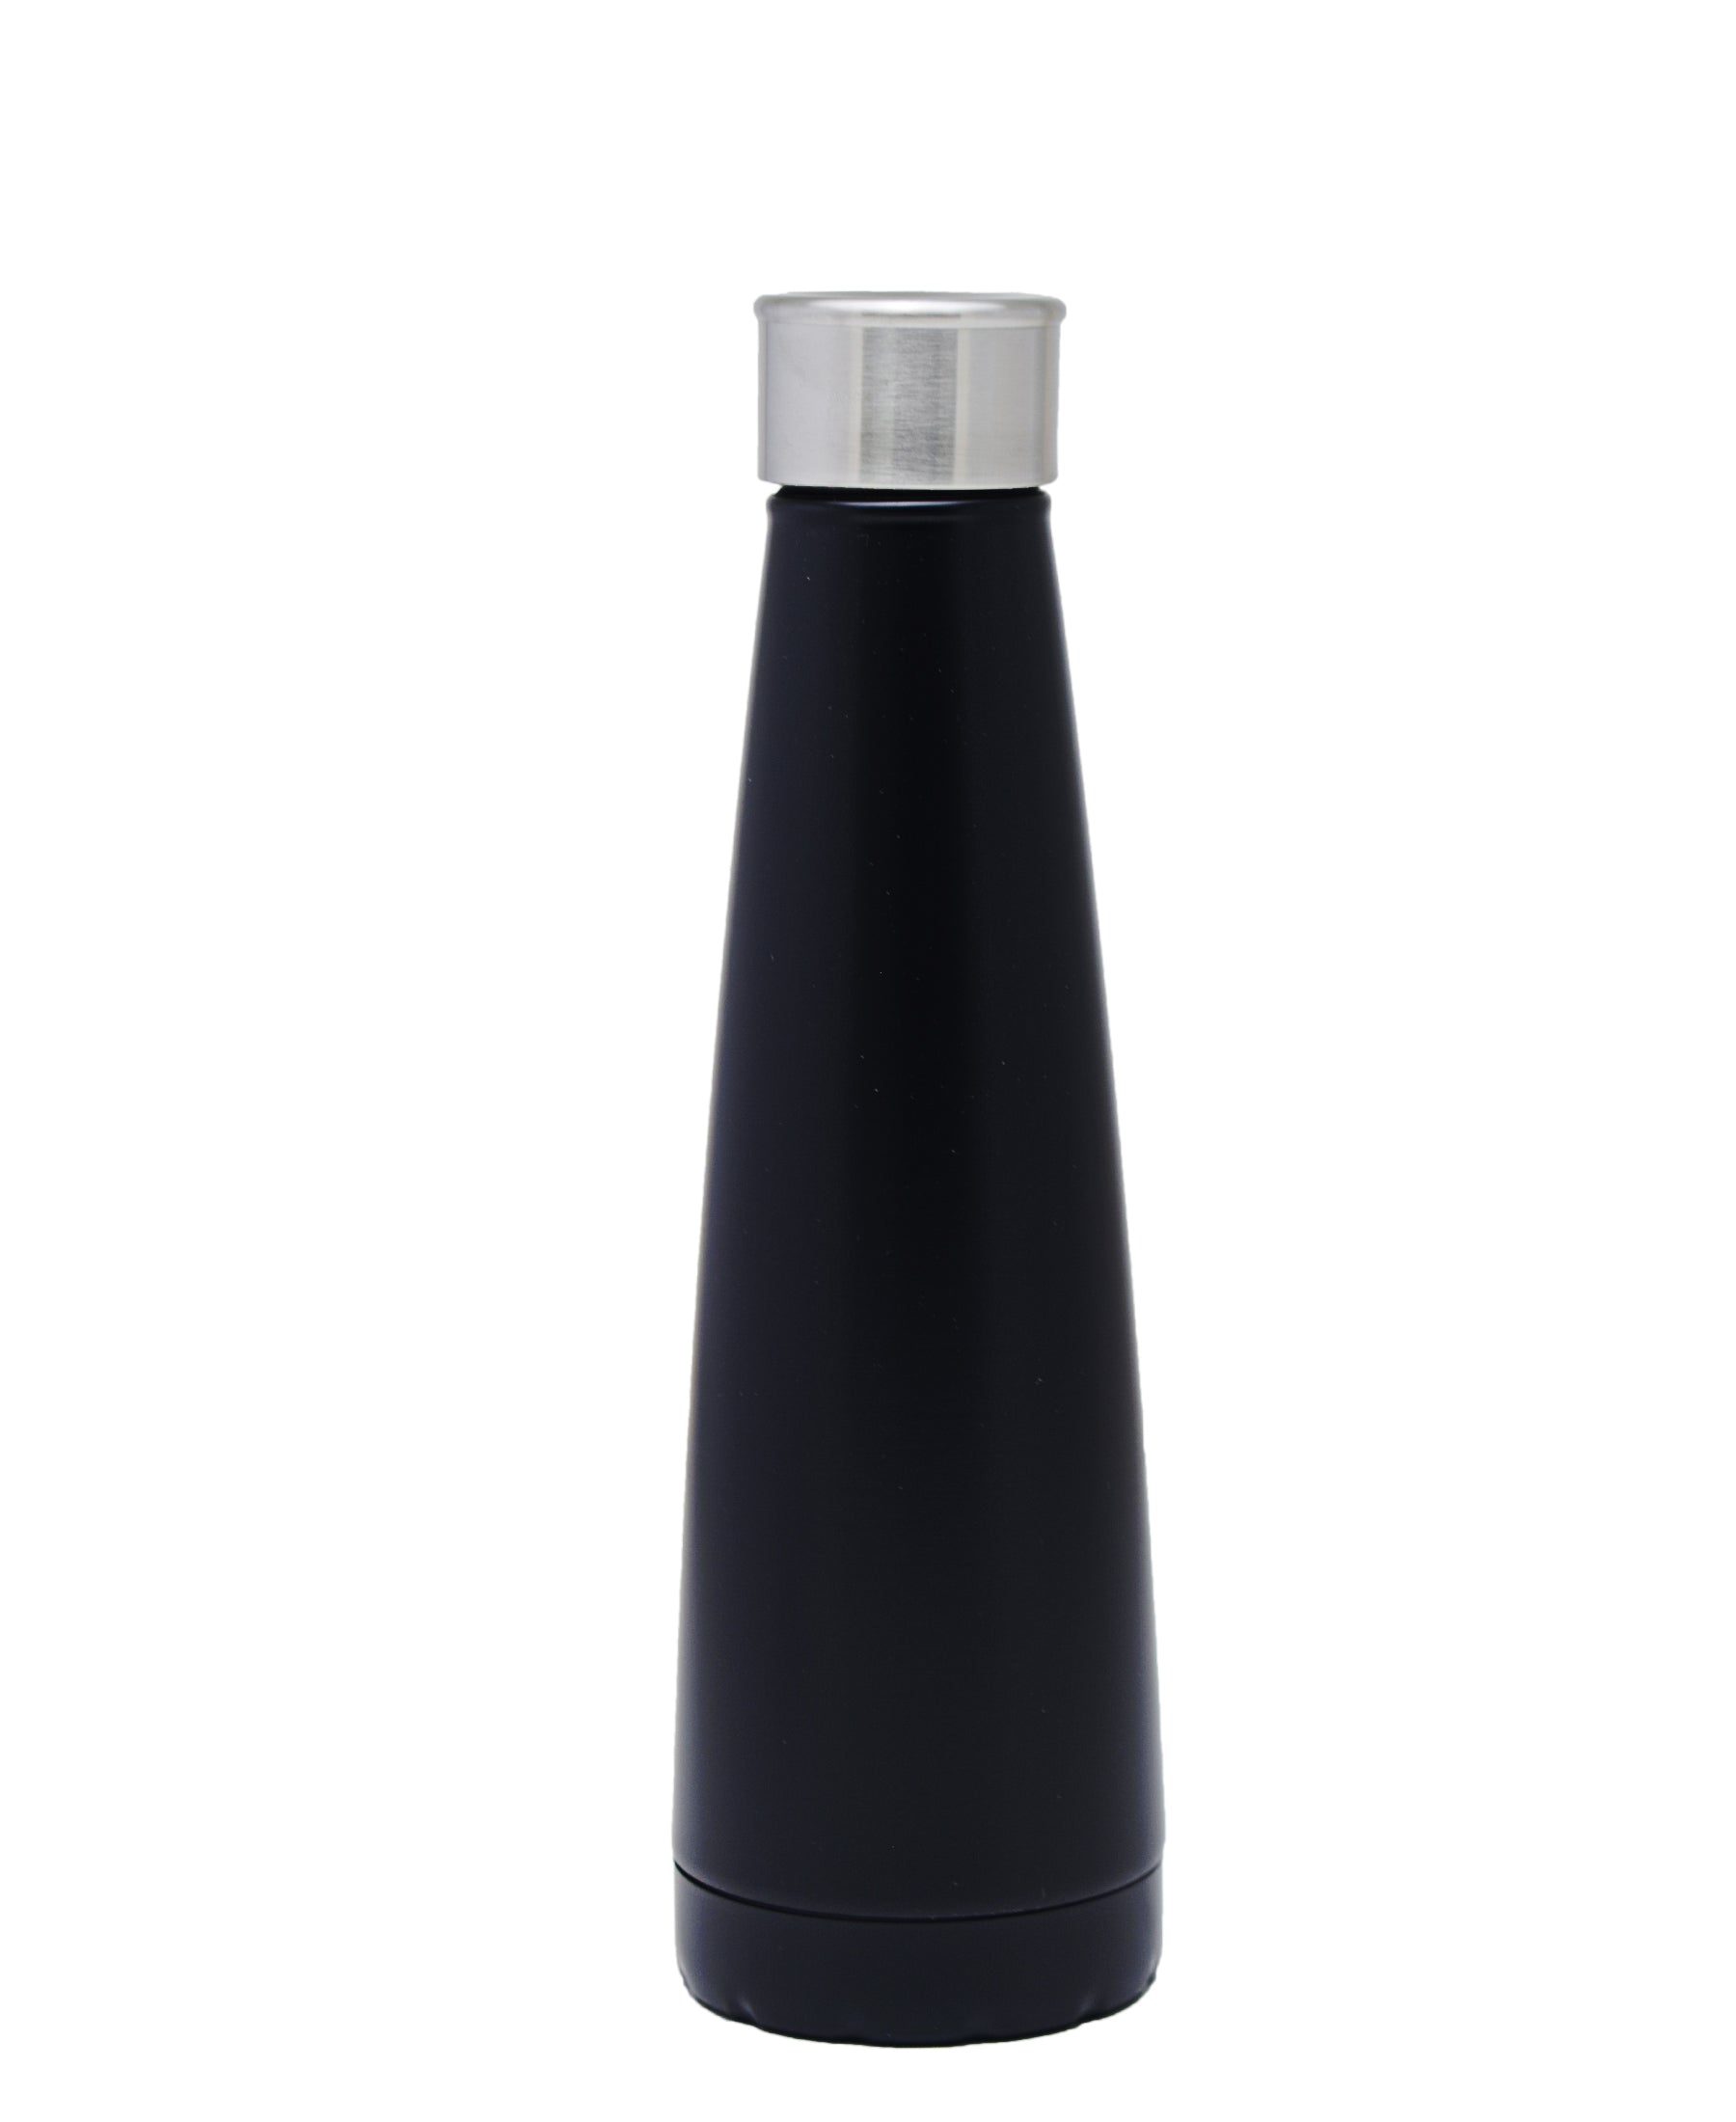 Kitchen Life Vacuum Stainless Steel Bottle - Matte Black